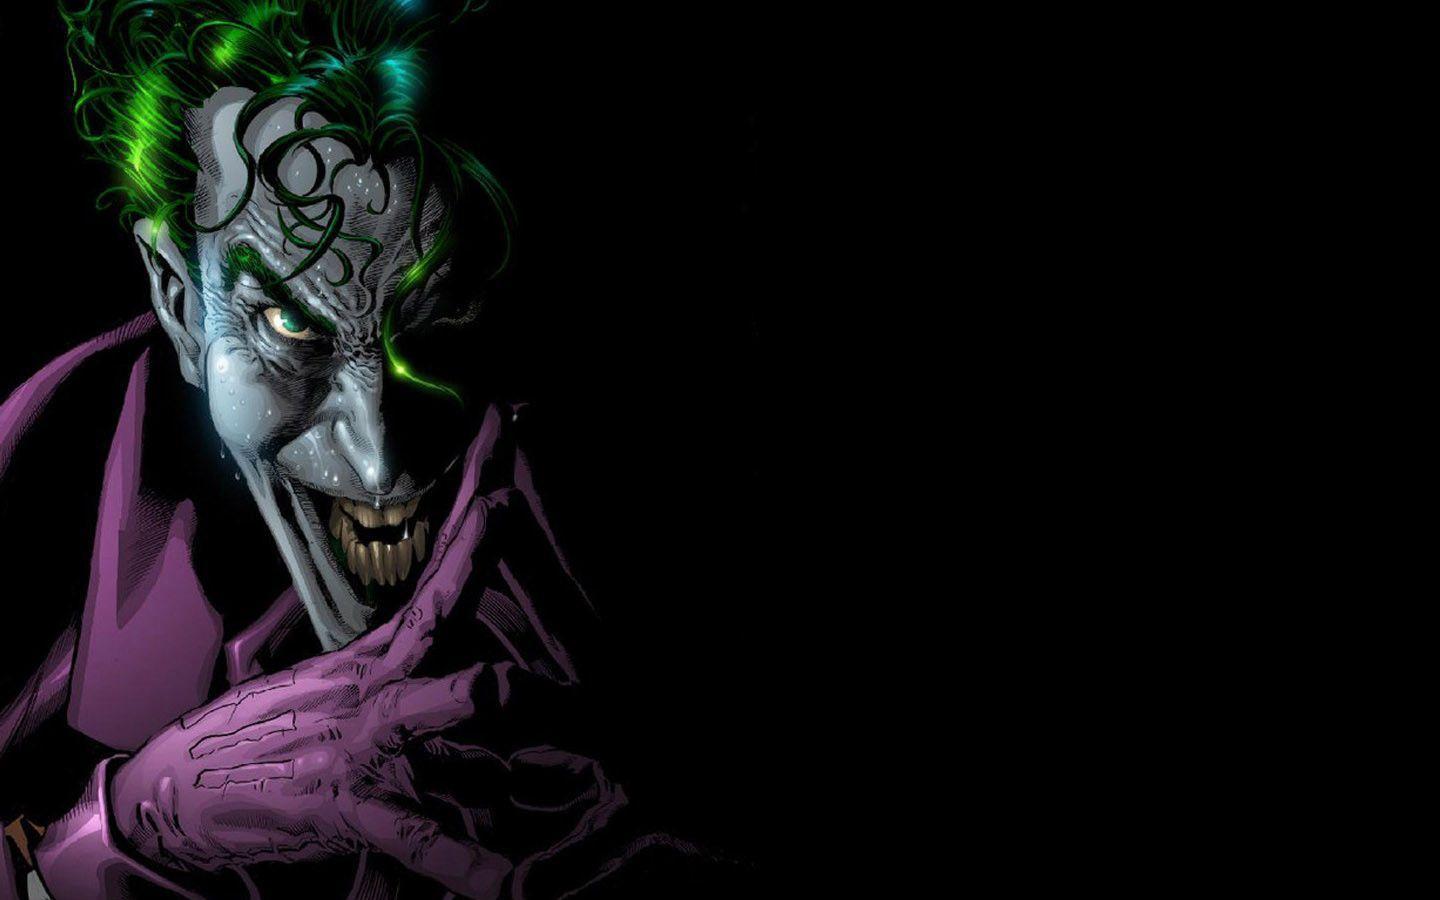 The Joker Comic Wallpaper Image & Picture